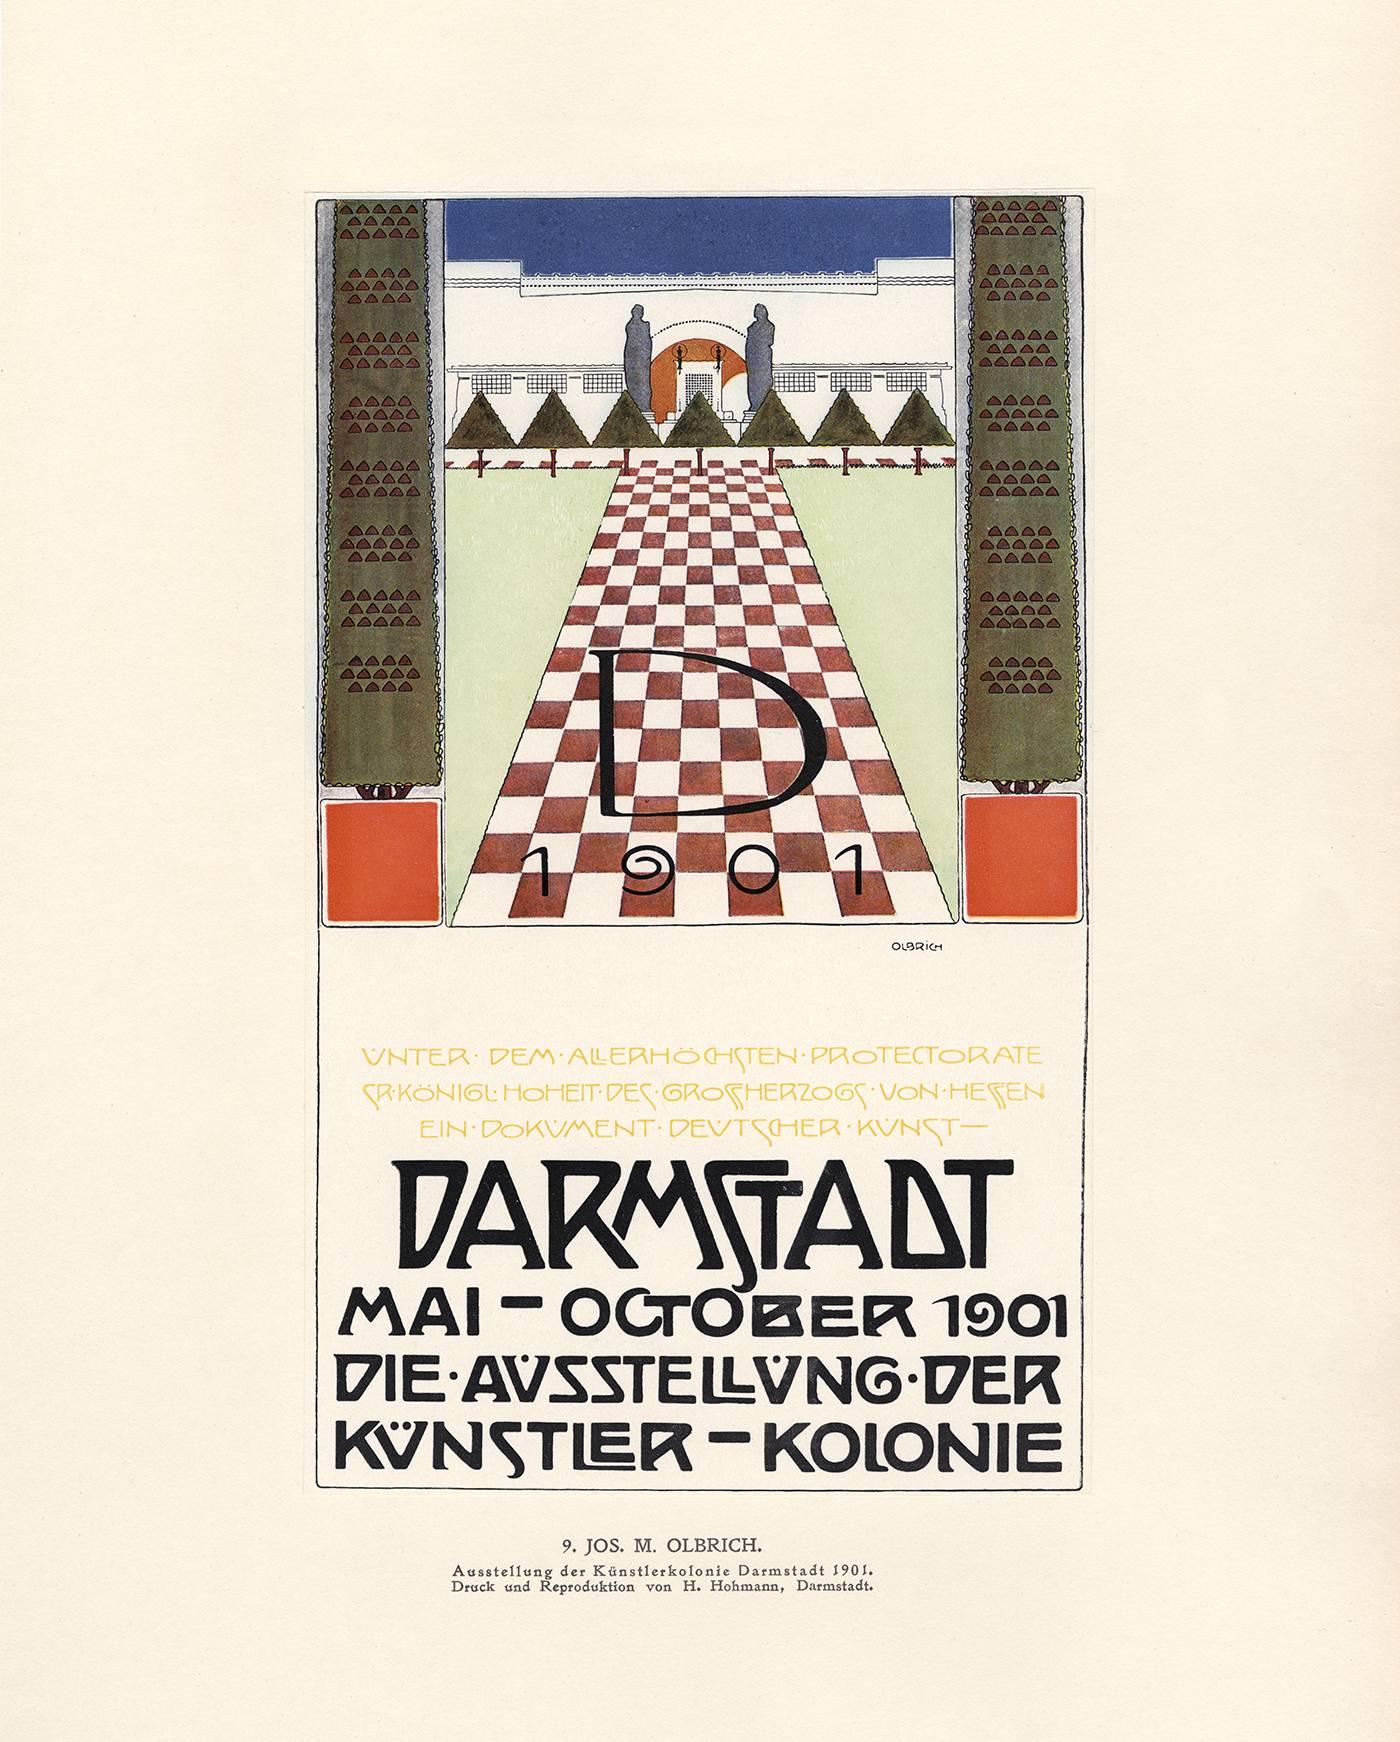 Ottokar Mascha Folio, plate 9: "Darmstadt Poster"by Joseph Maria Olbricht